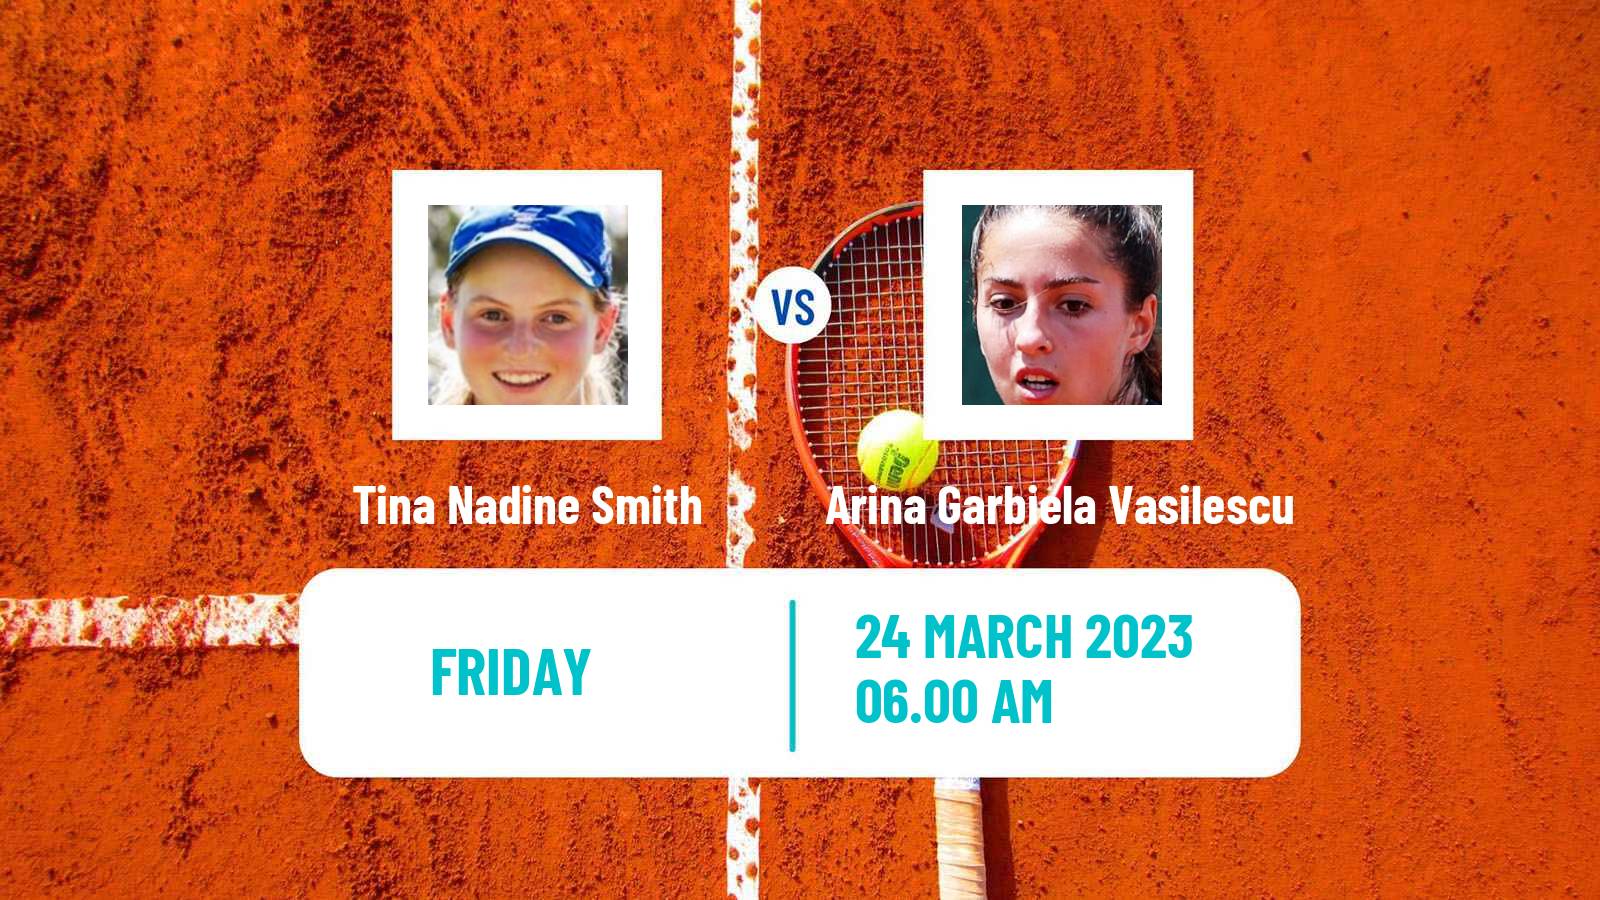 Tennis ITF Tournaments Tina Nadine Smith - Arina Garbiela Vasilescu